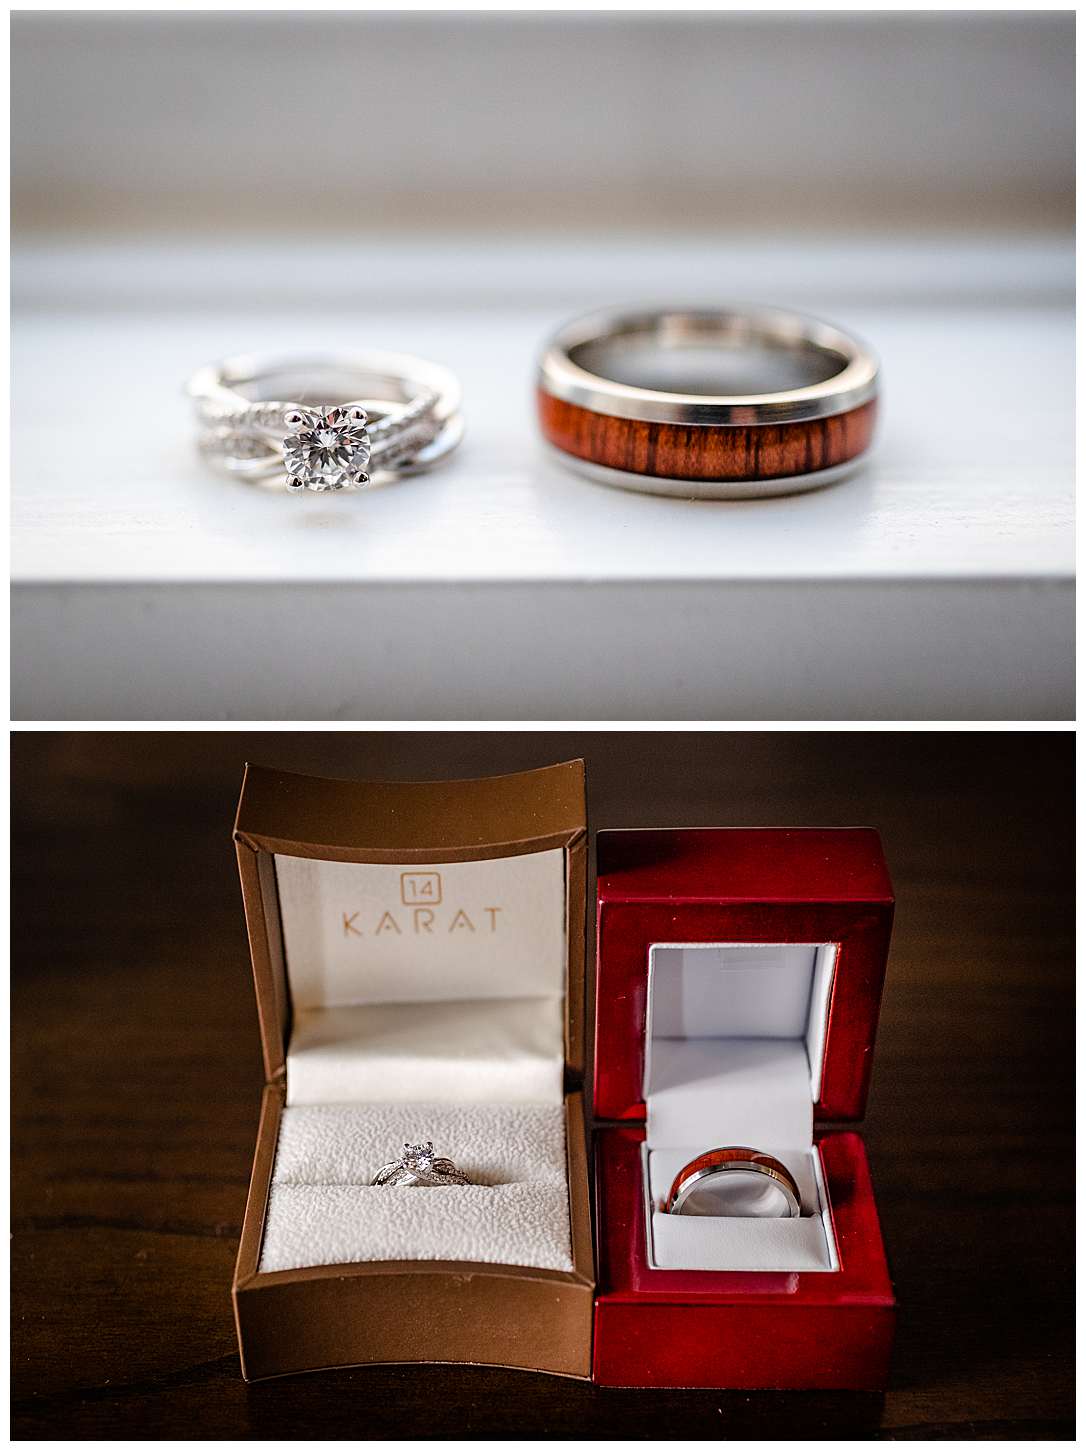 Details of wedding rings